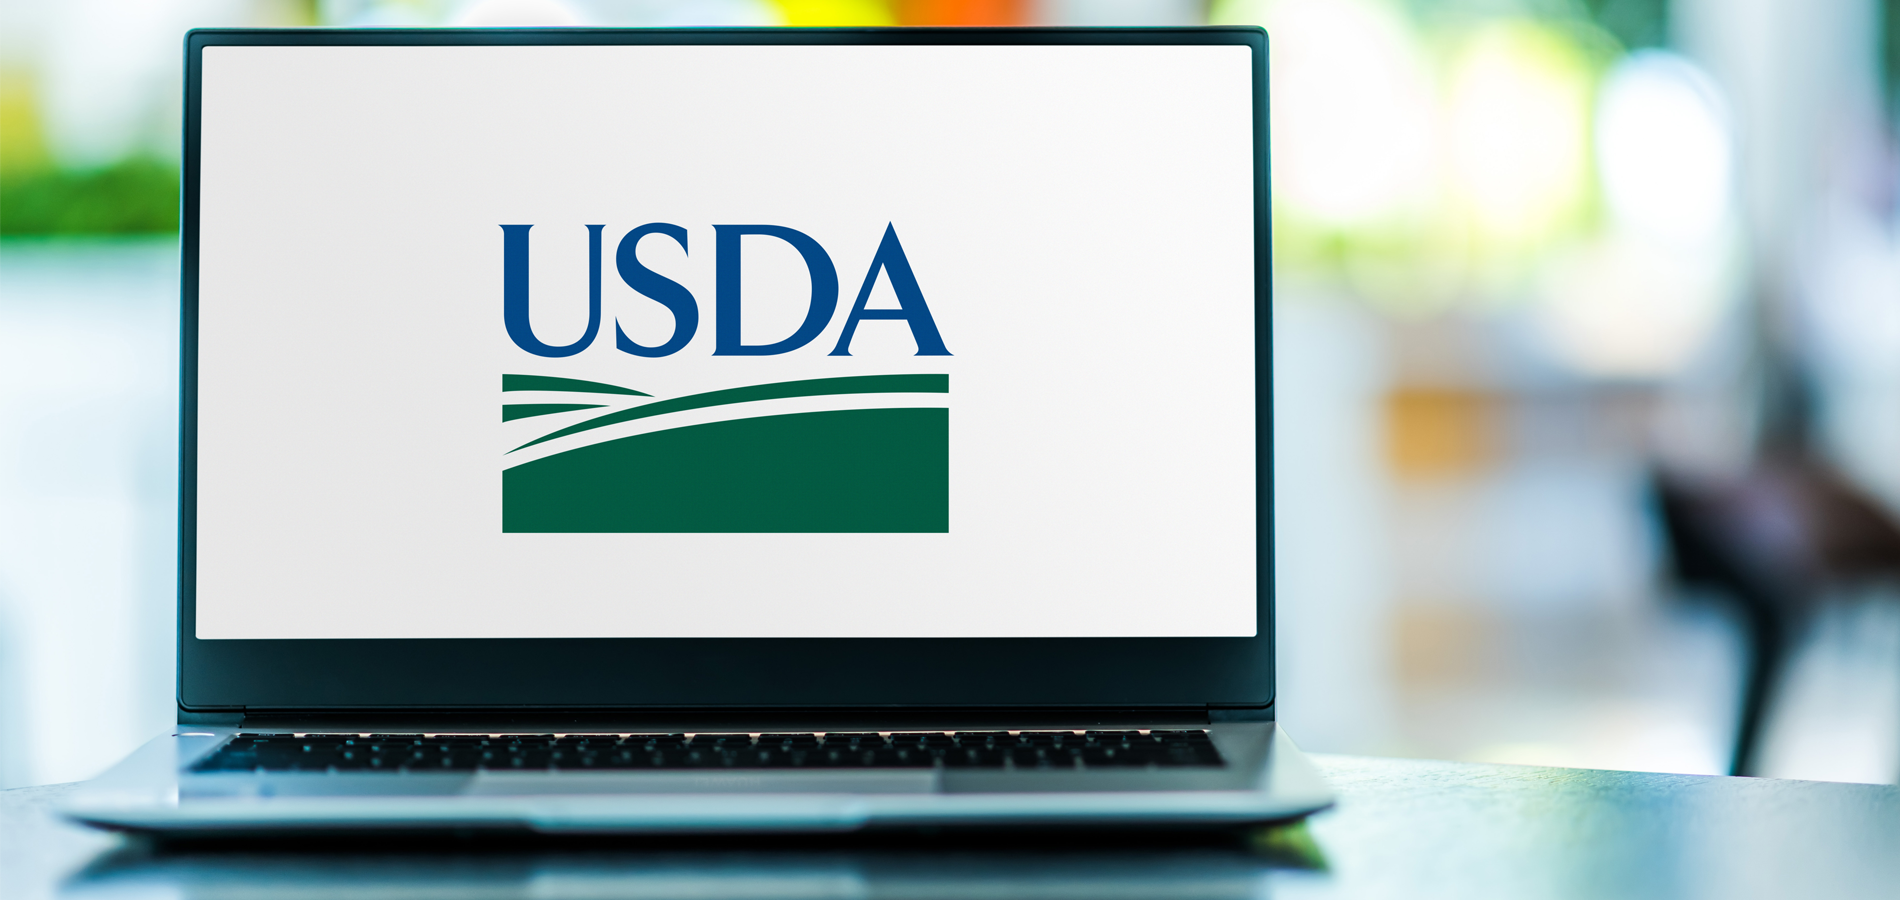 USDA logo on computer screen